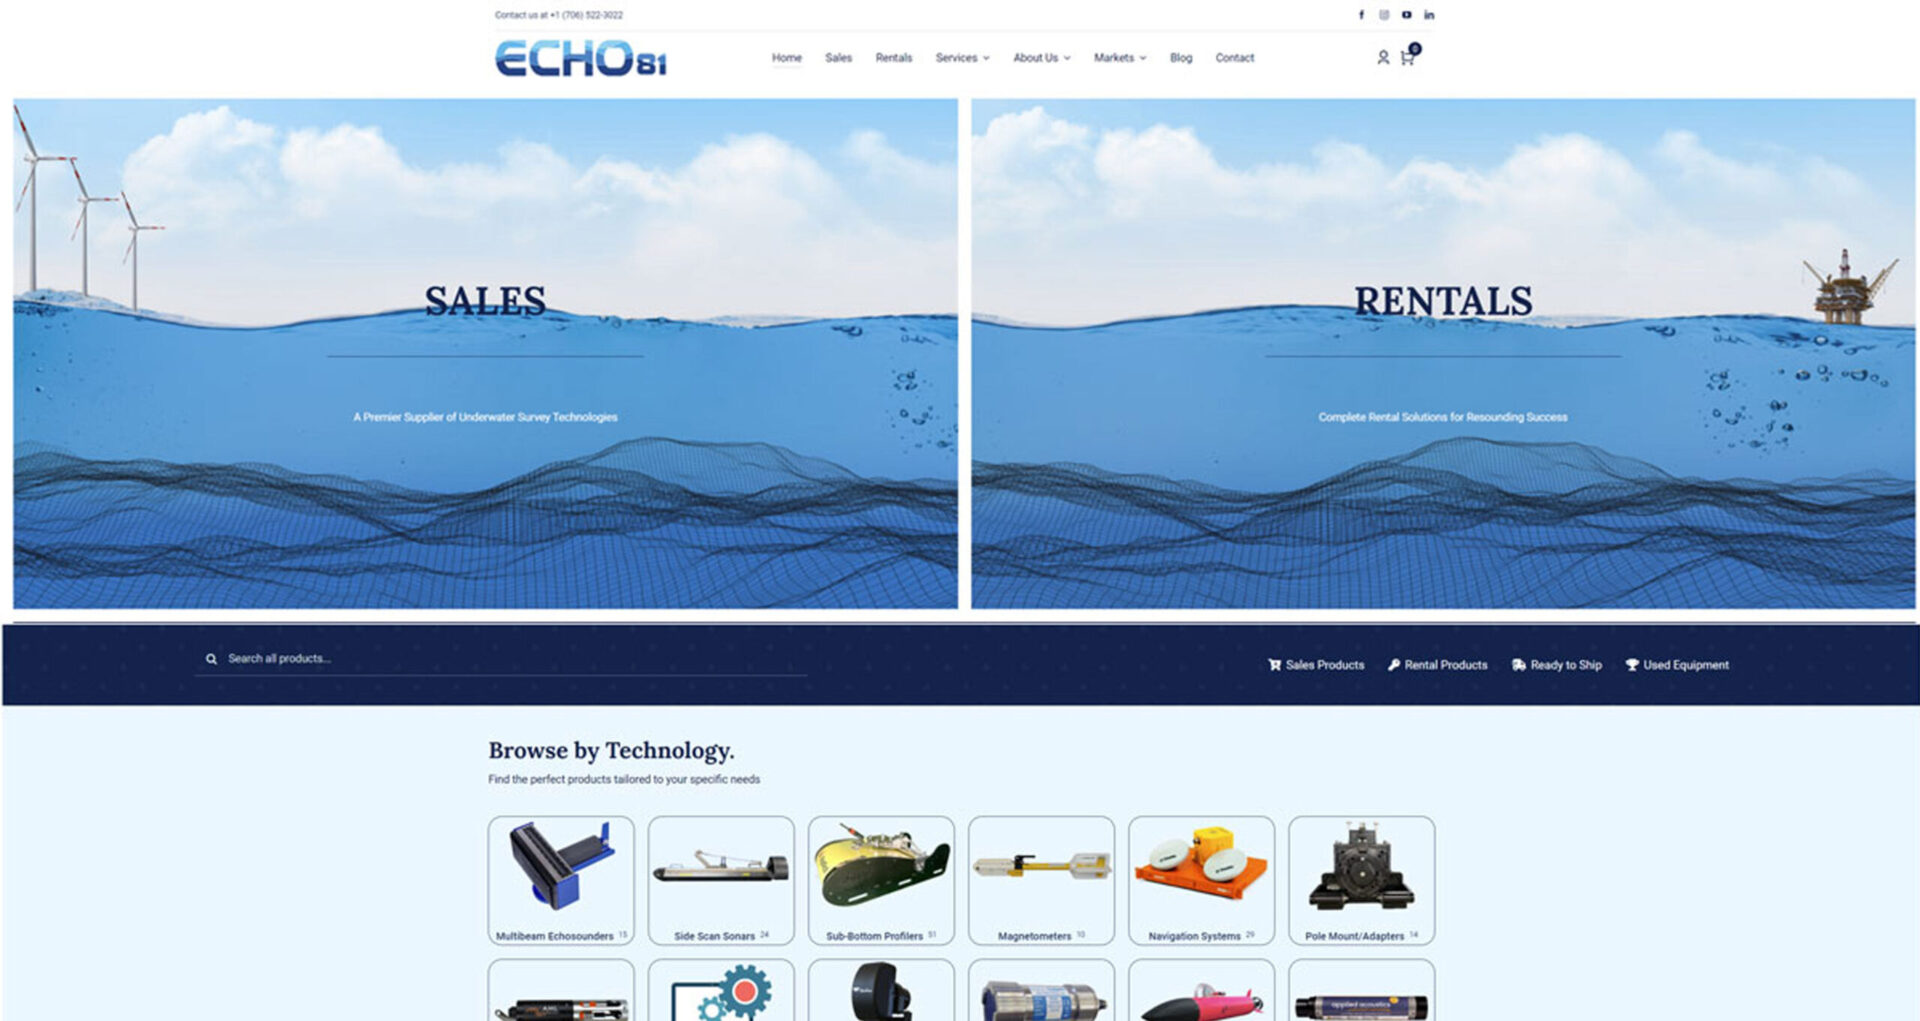 New Website ECHO81 is Premier Supplier of Underwater Survey Technologies Rental Sales Training Offshore Hydrography Geophysics.